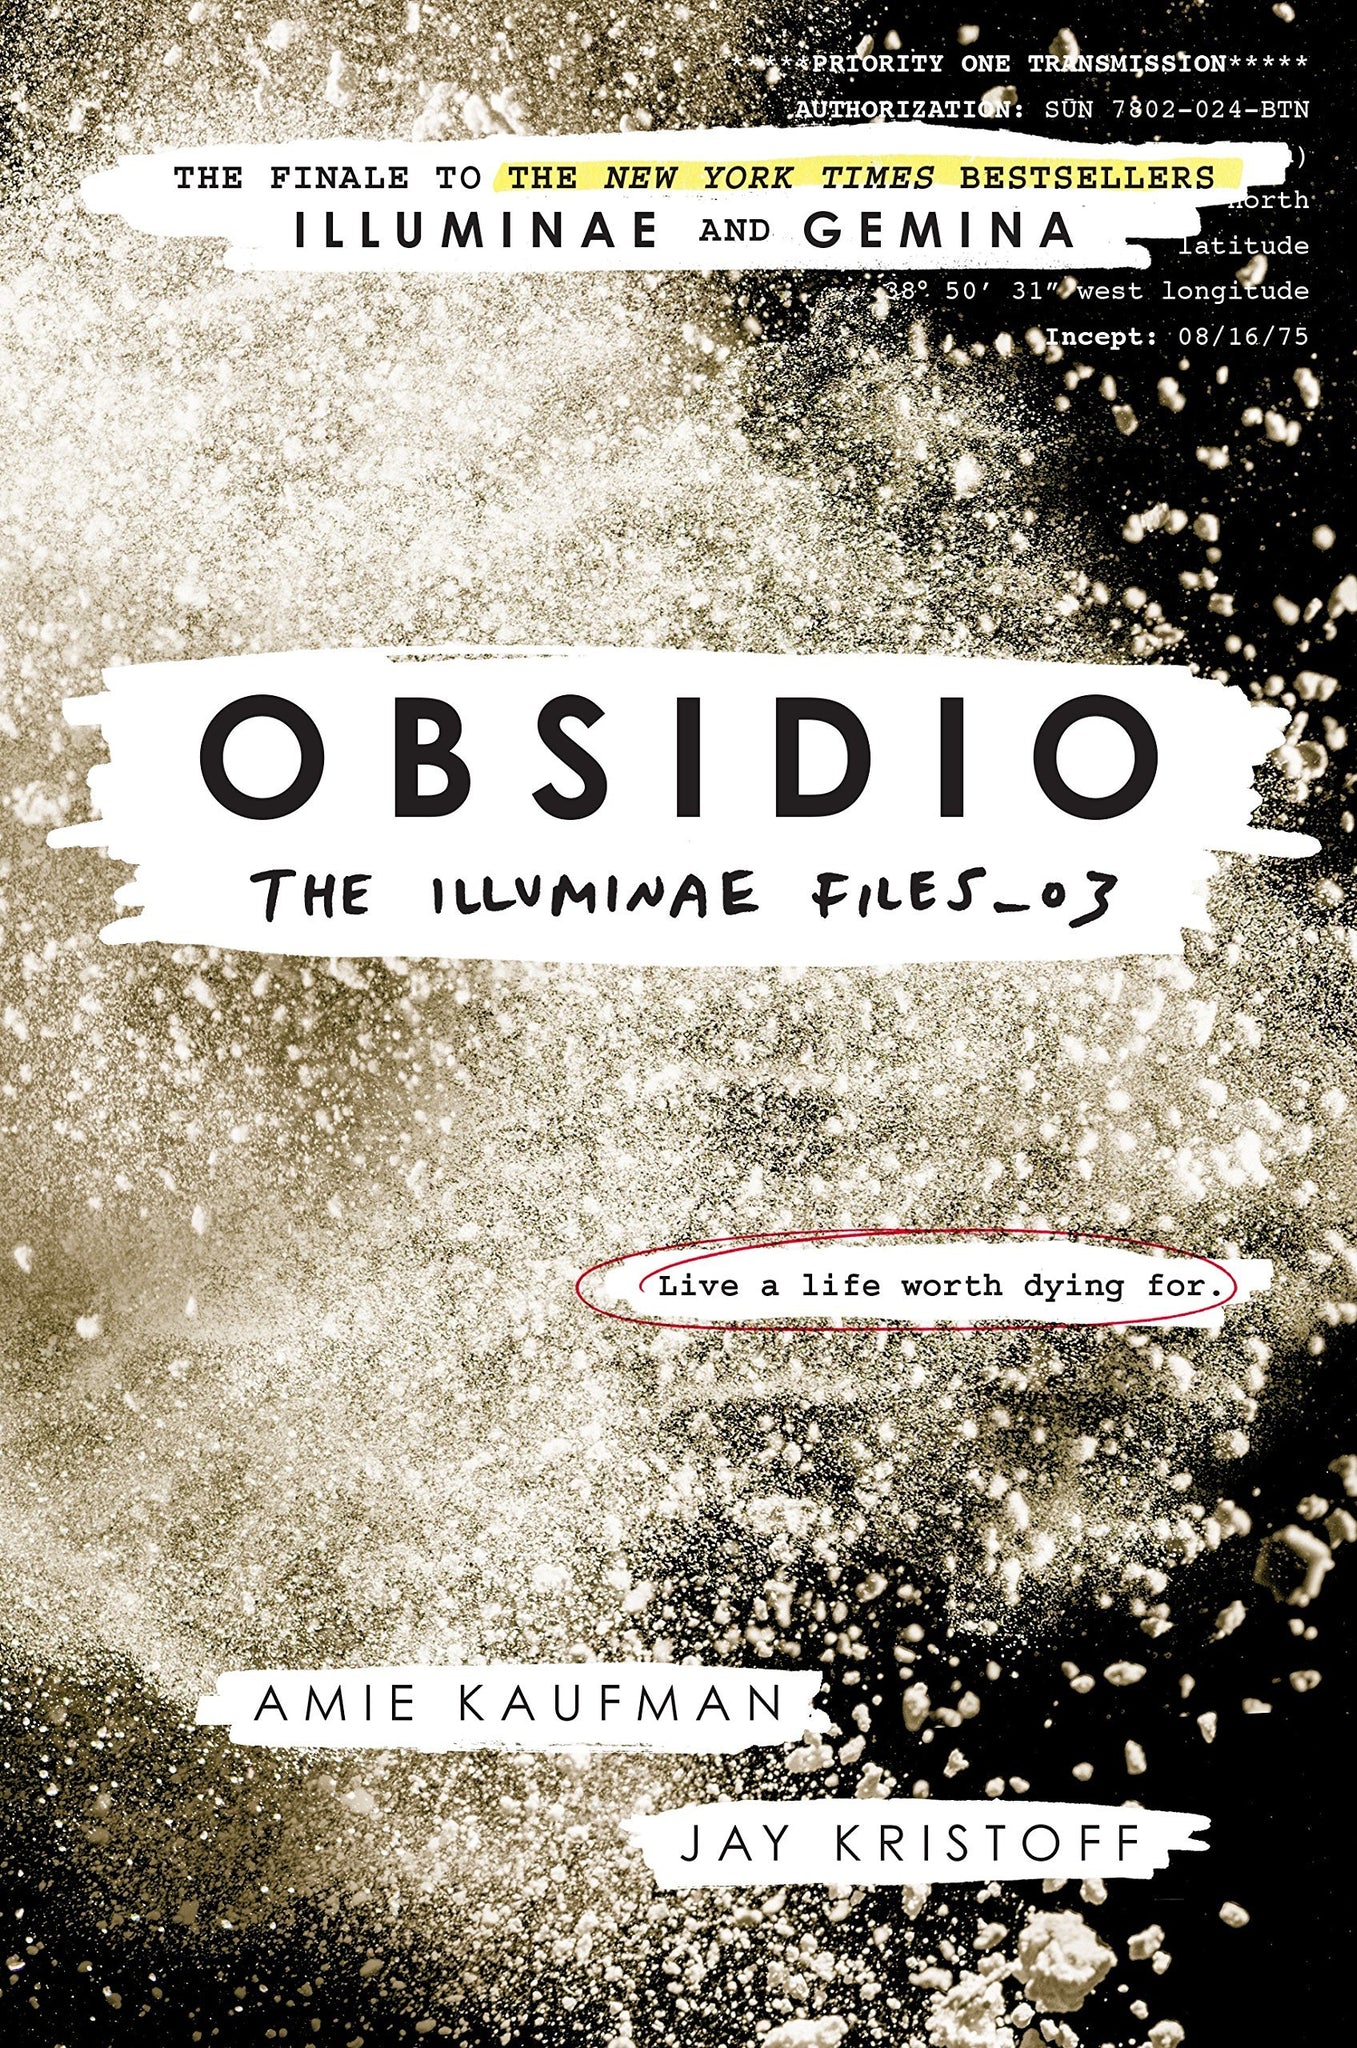 Obsidio (The Illuminae Files #3) - Amie Kaufman